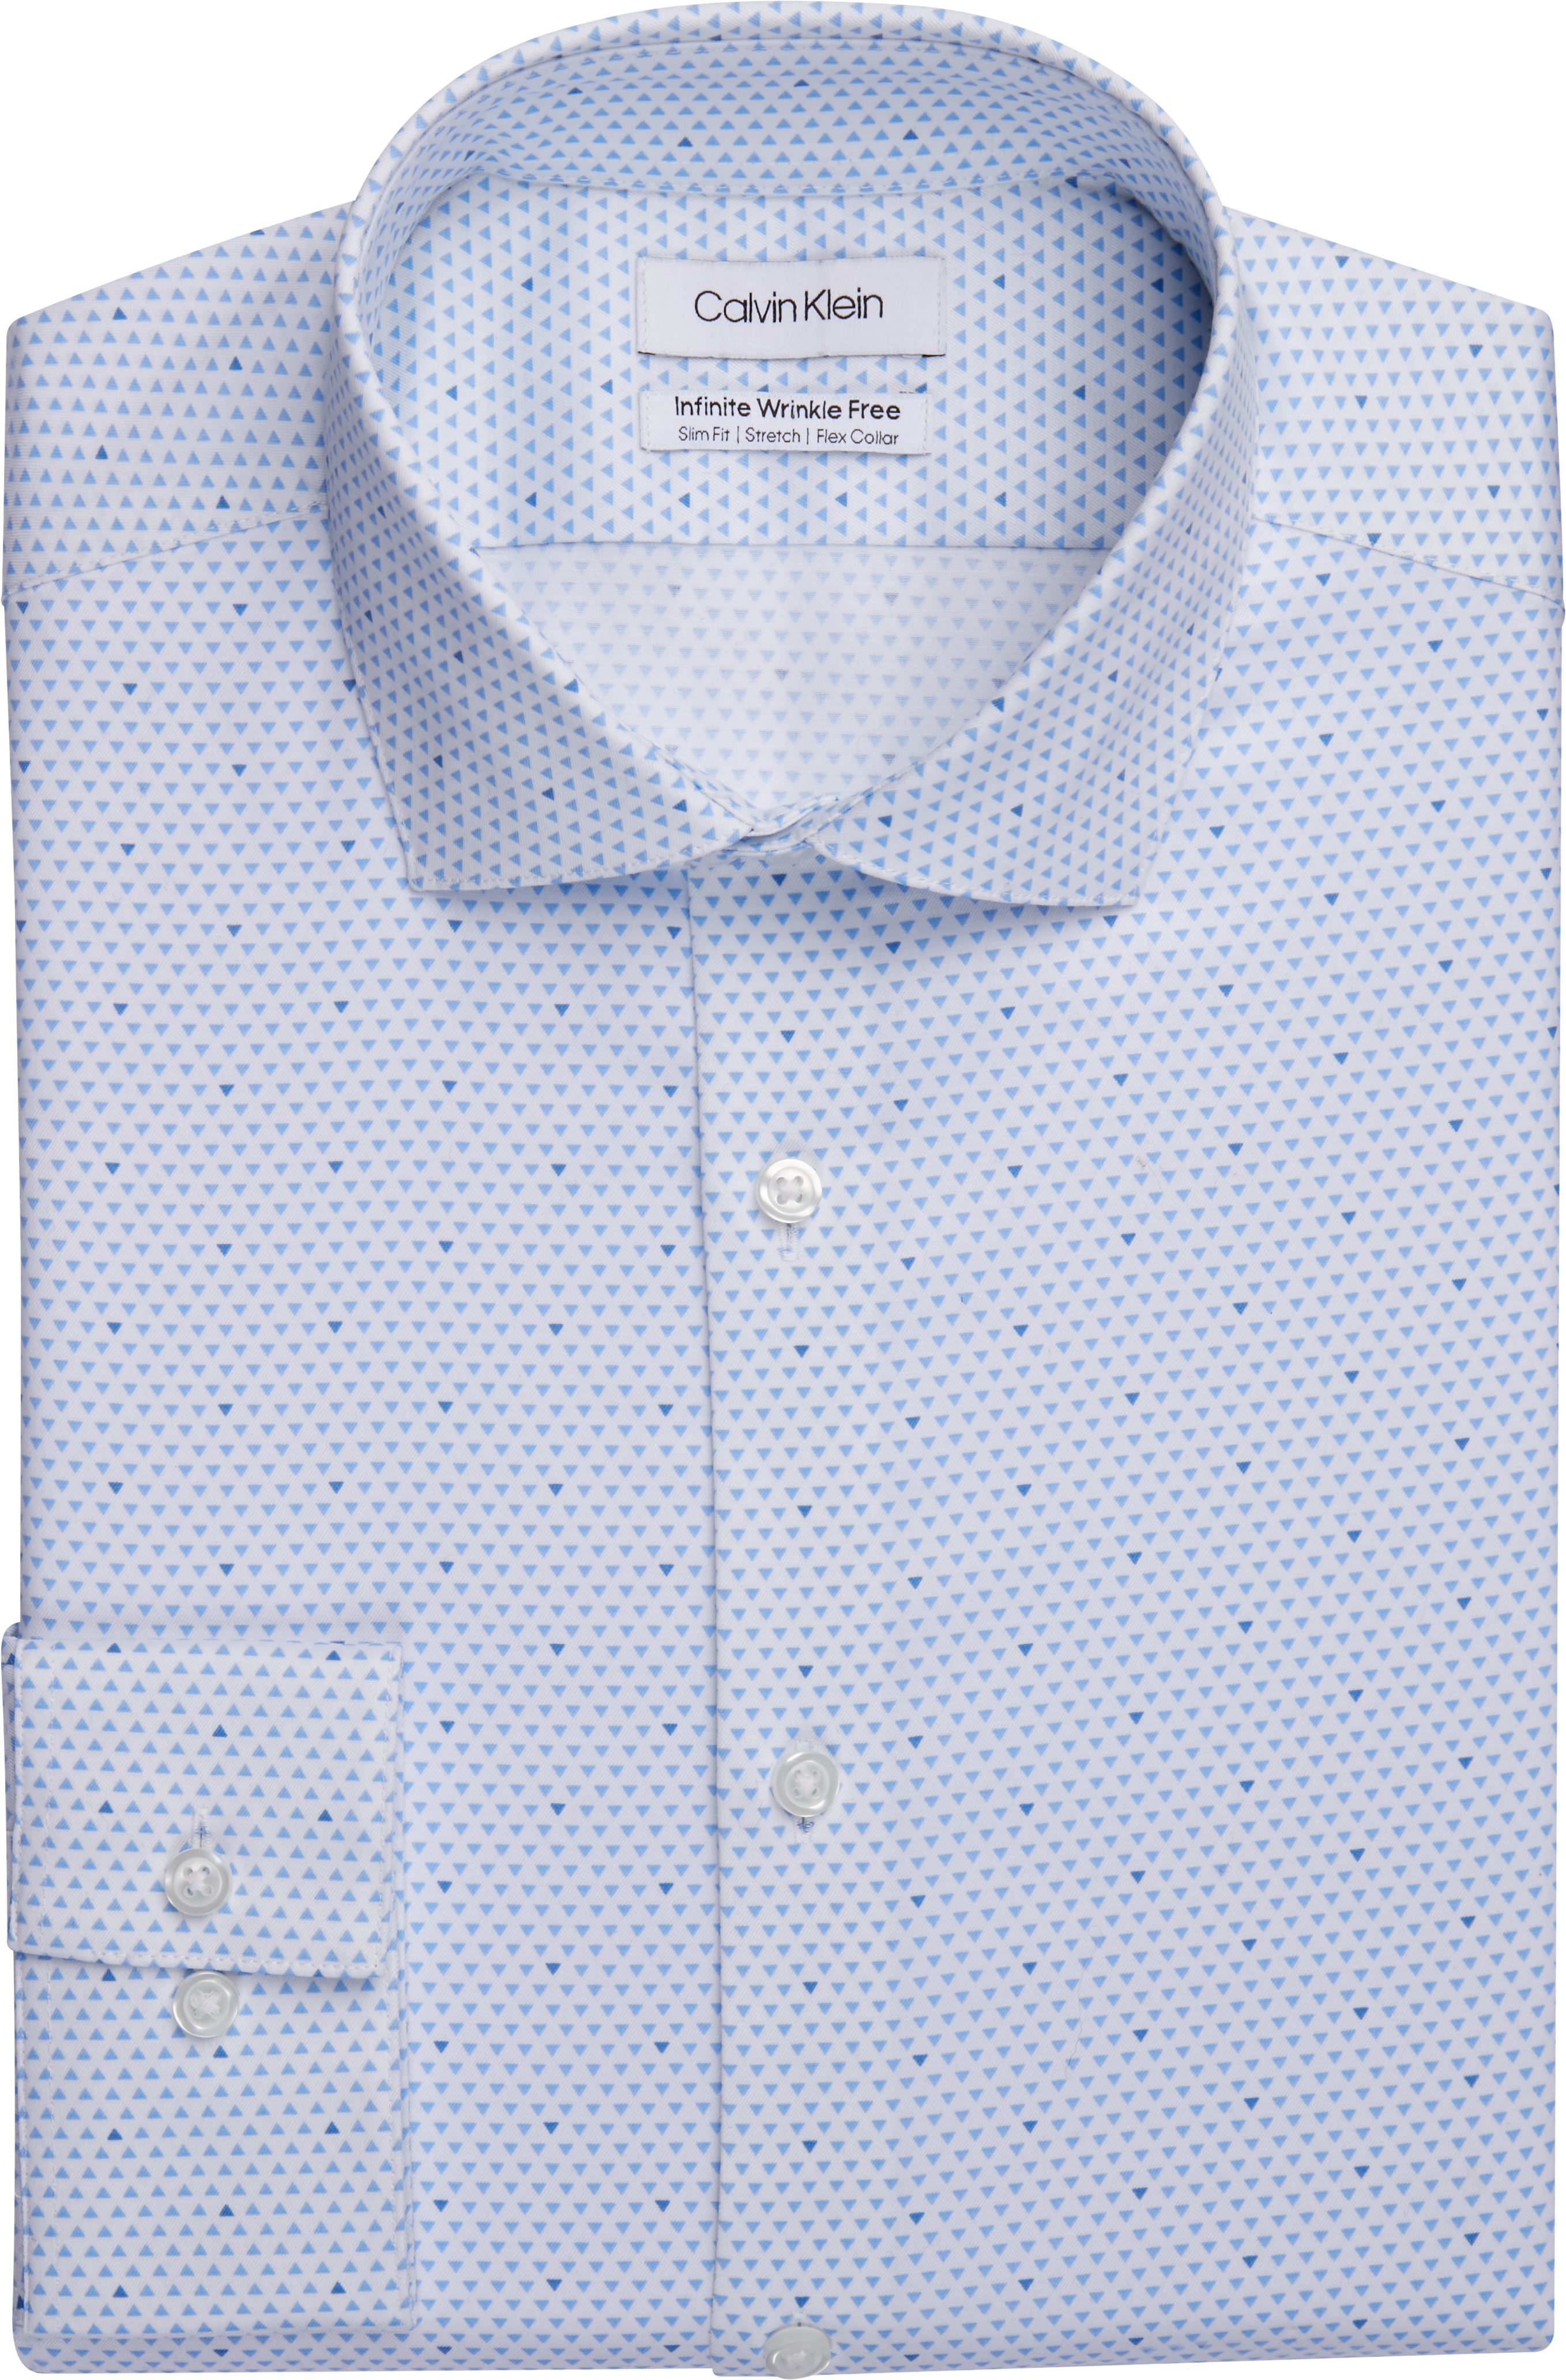 Calvin Klein Infinite Slim Fit Spread Collar Dress Shirt, Blue Mini Diamond  - Men's Featured | Men's